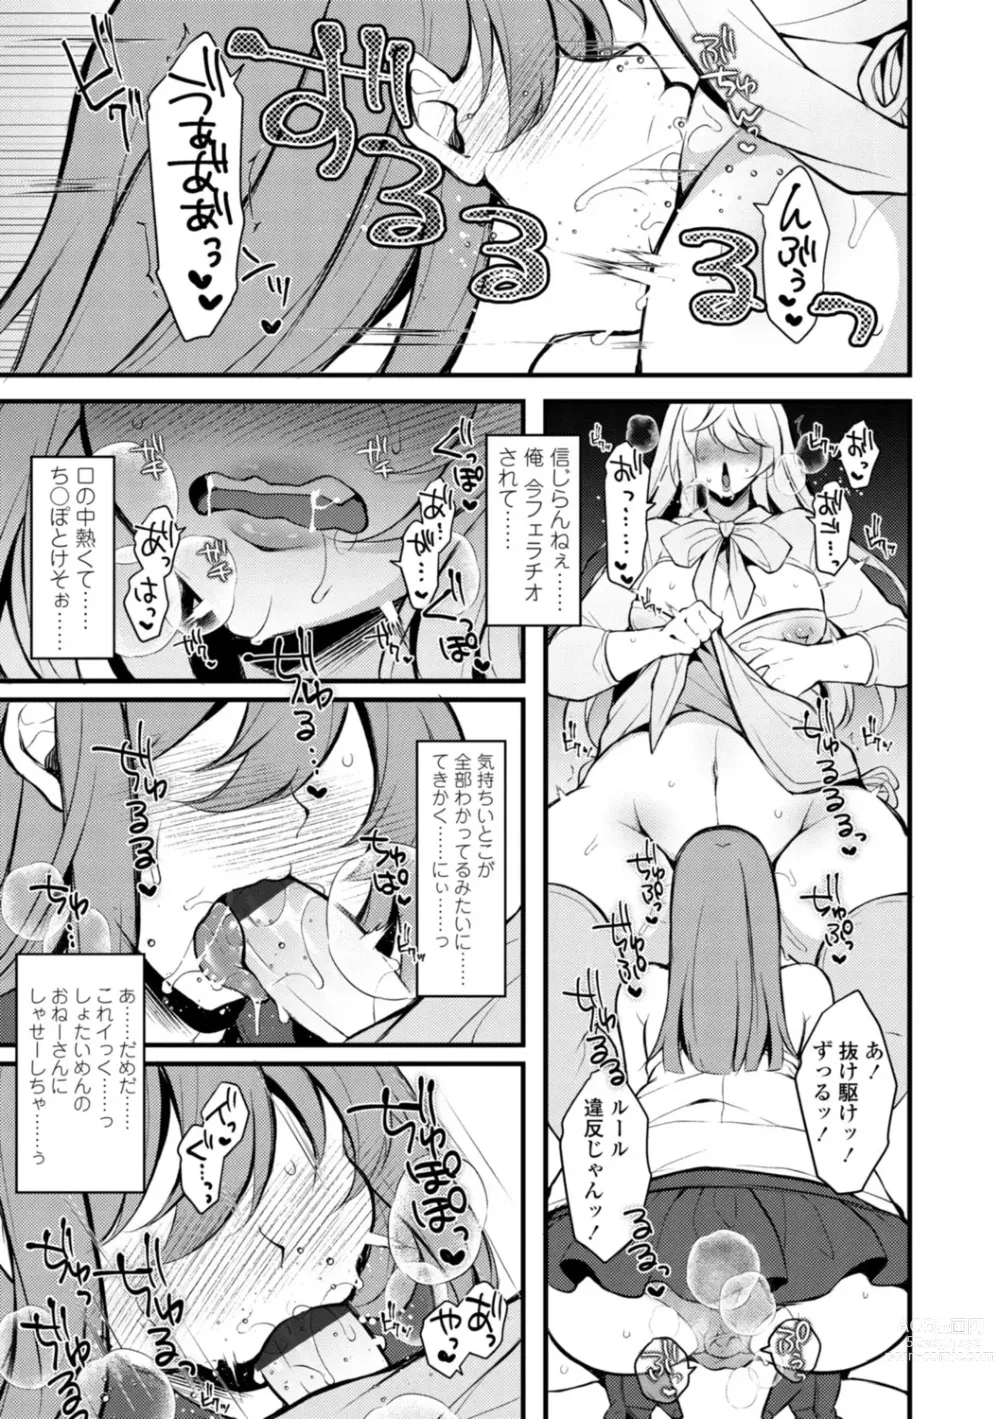 Page 177 of manga Onnanoko-sama no Iu Toori